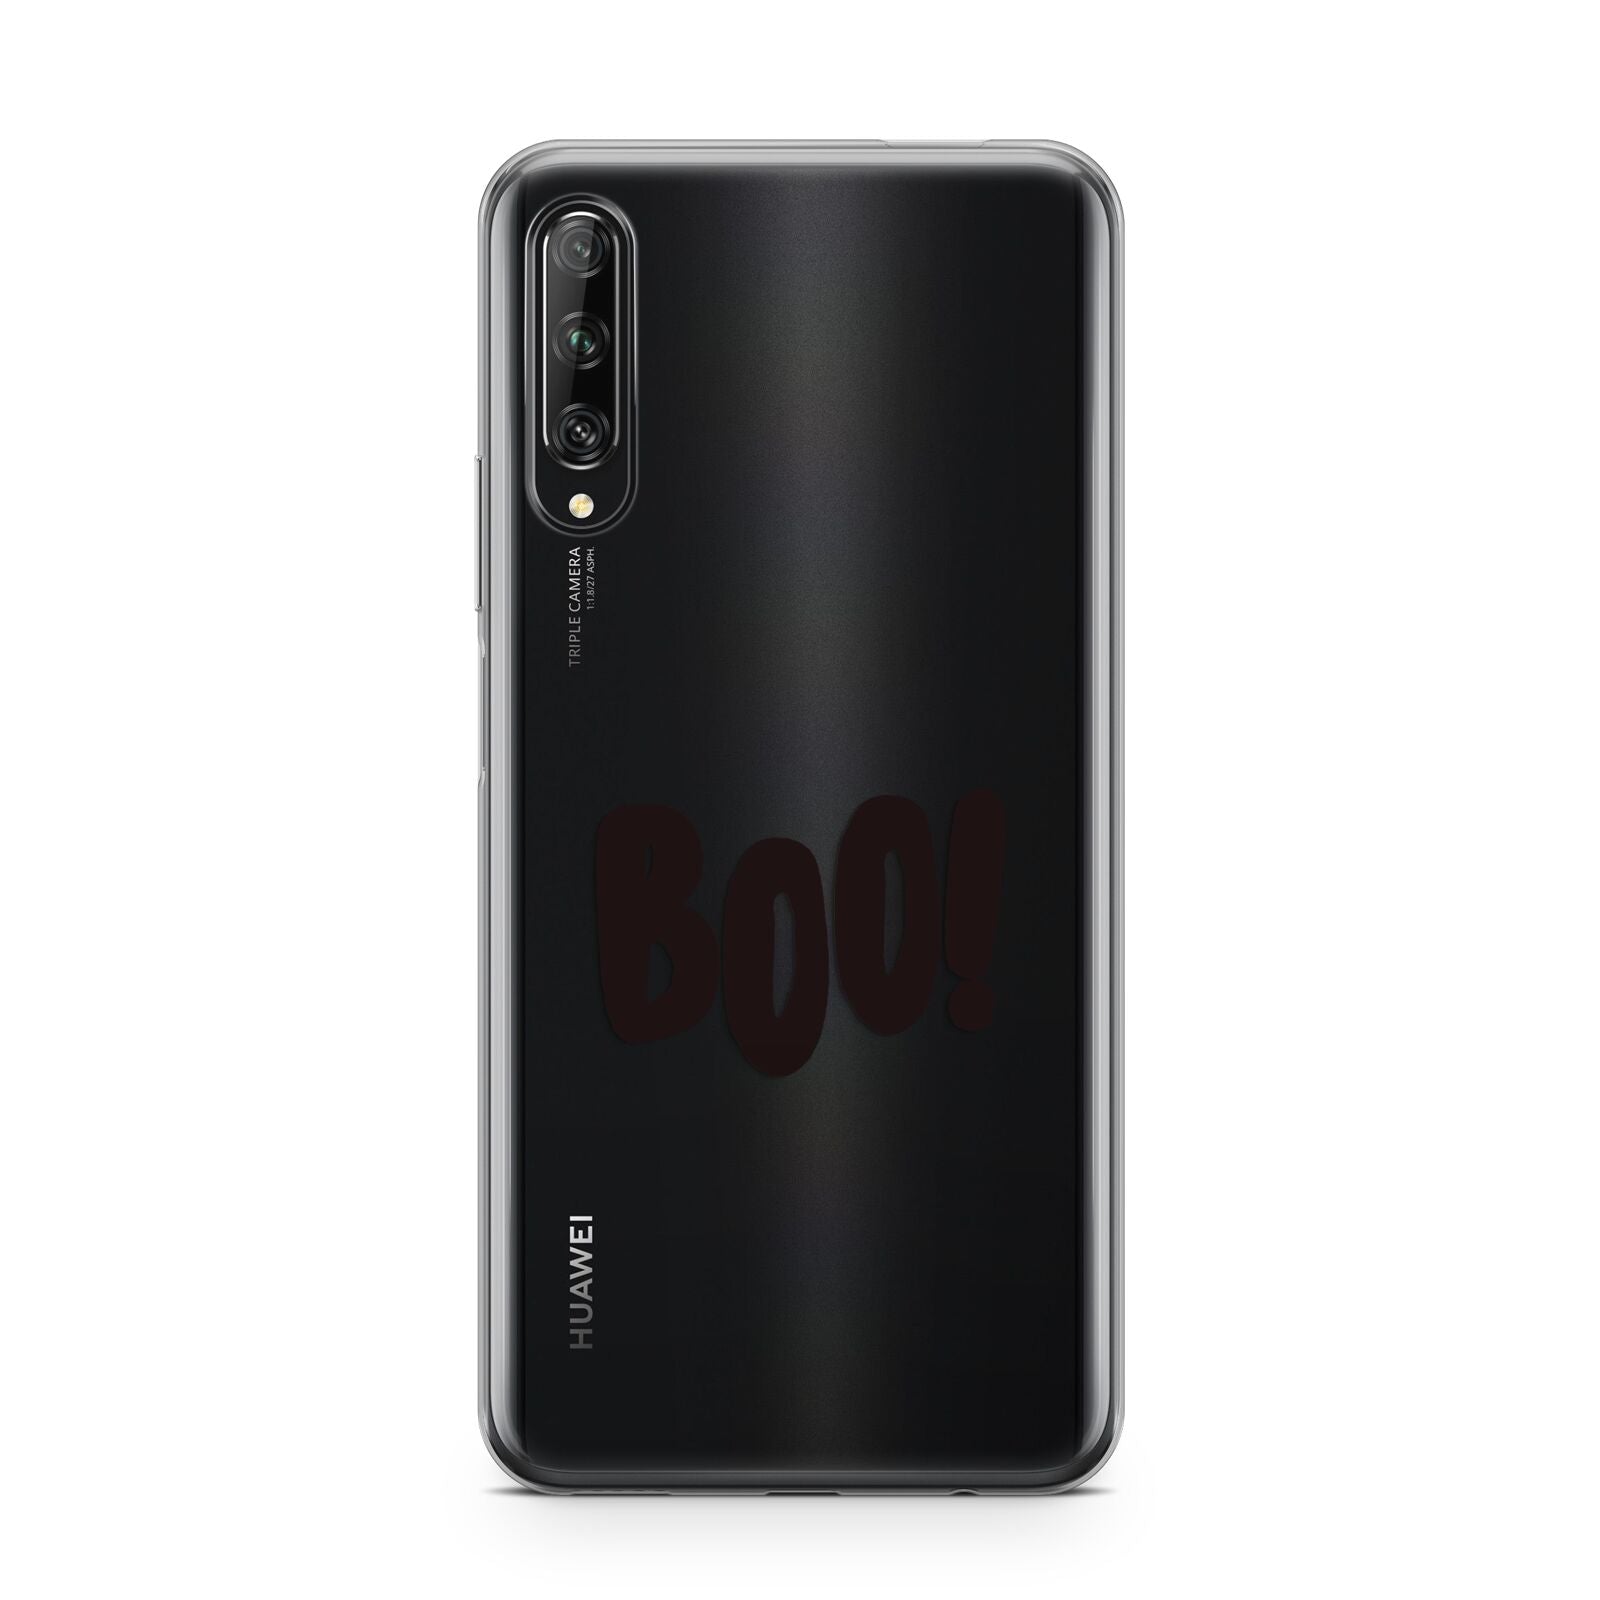 Boo Black Huawei P Smart Pro 2019